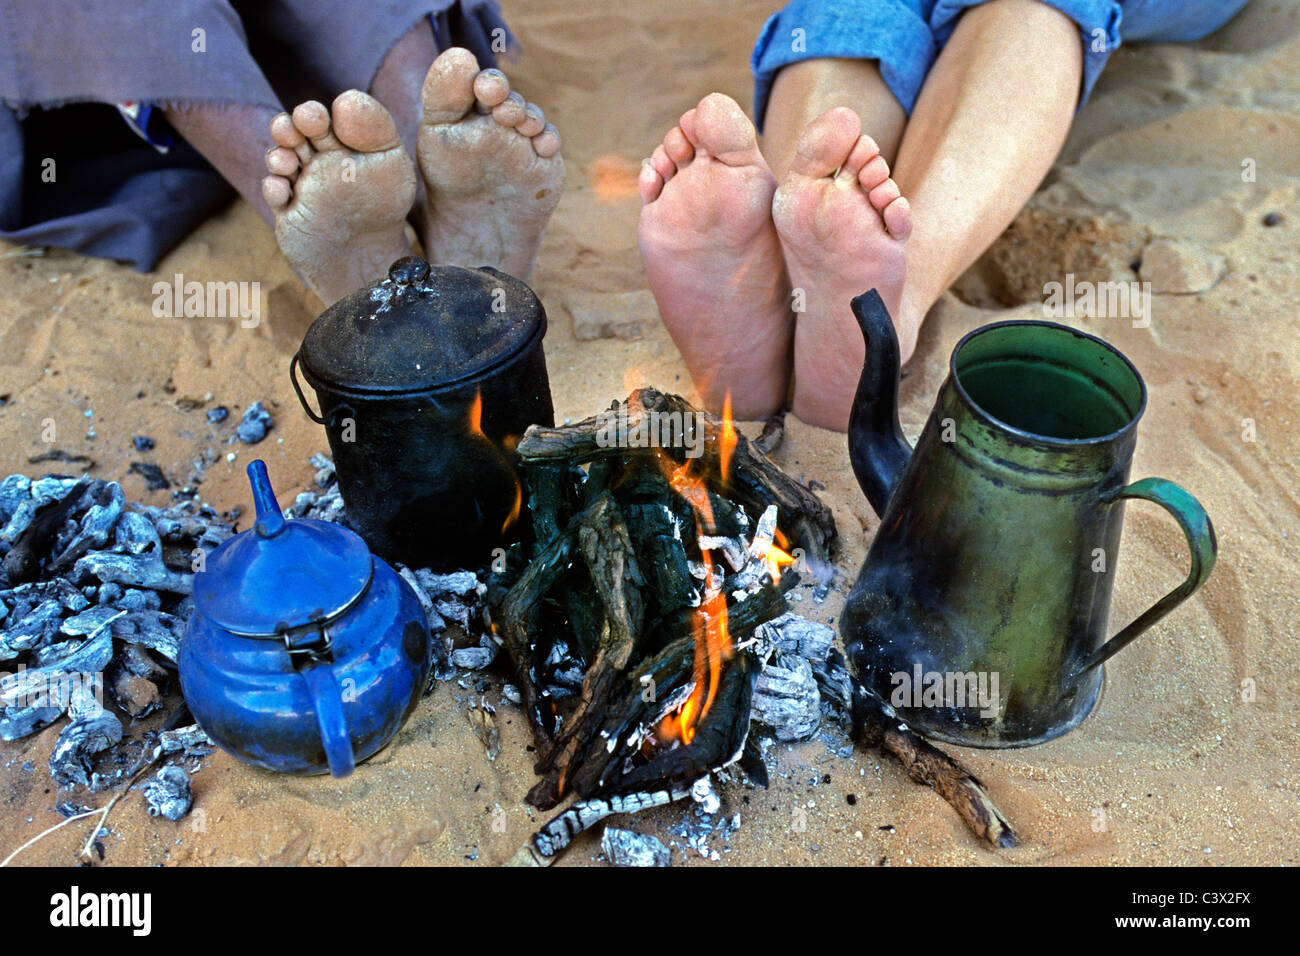 Algeria, Djanet, Sahara Desert, Feet of man of Tuareg tribe and tourist. Tea pots. Campfire. Stock Photo